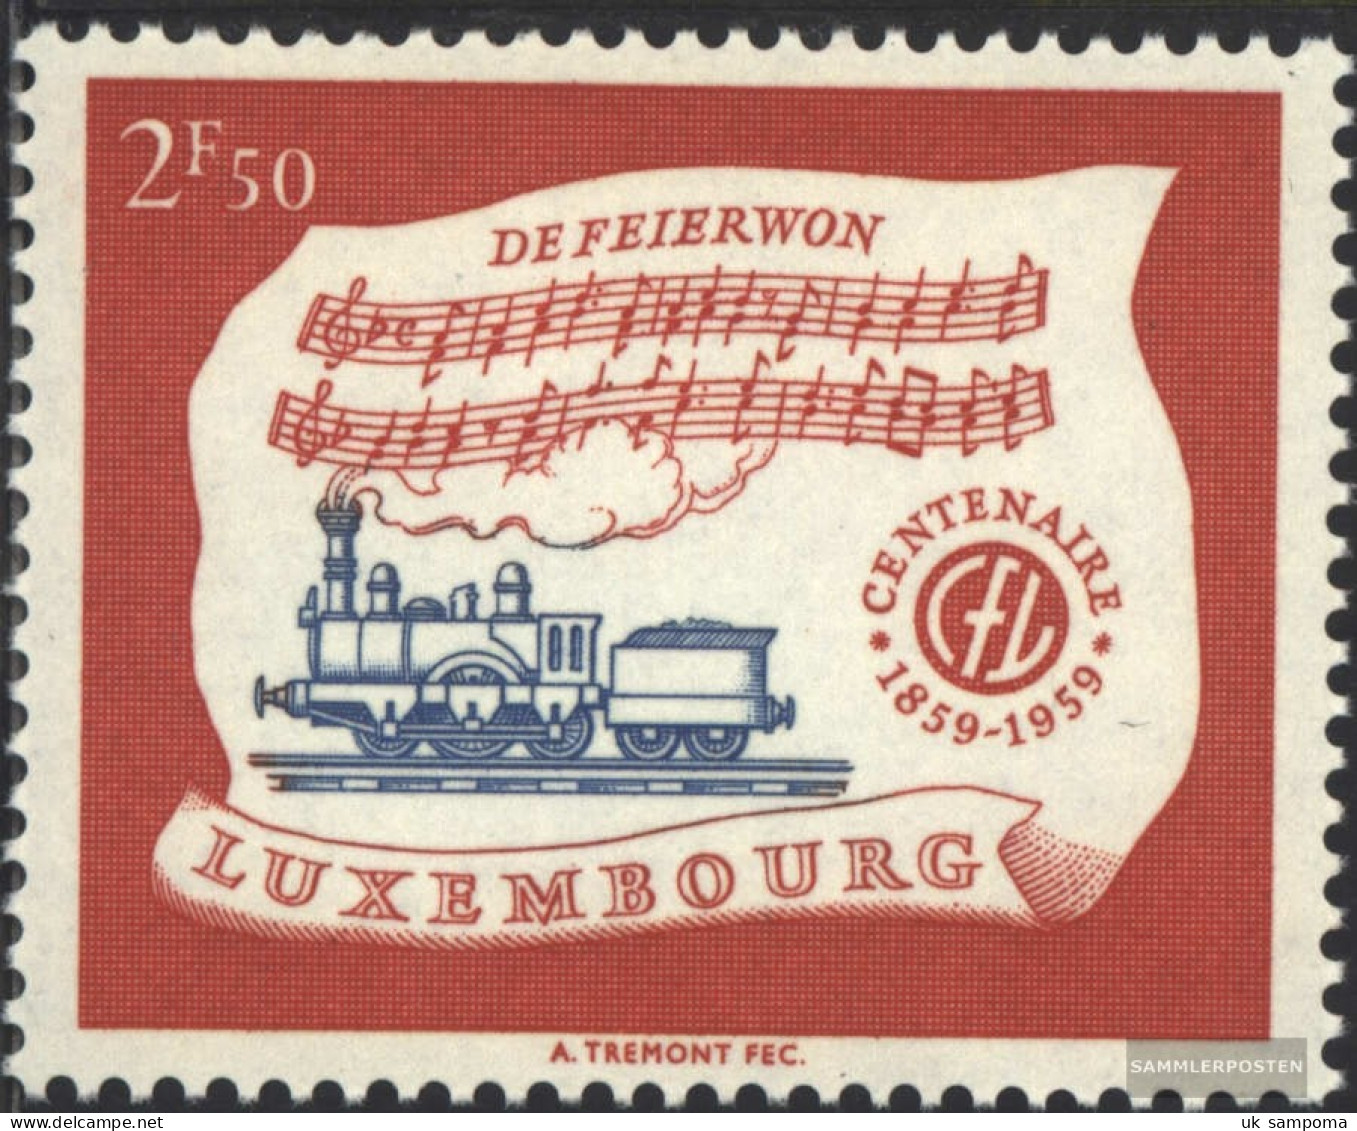 Luxembourg 611 (complete Issue) Unmounted Mint / Never Hinged 1959 Railway - The Feuerwagen - Ungebraucht